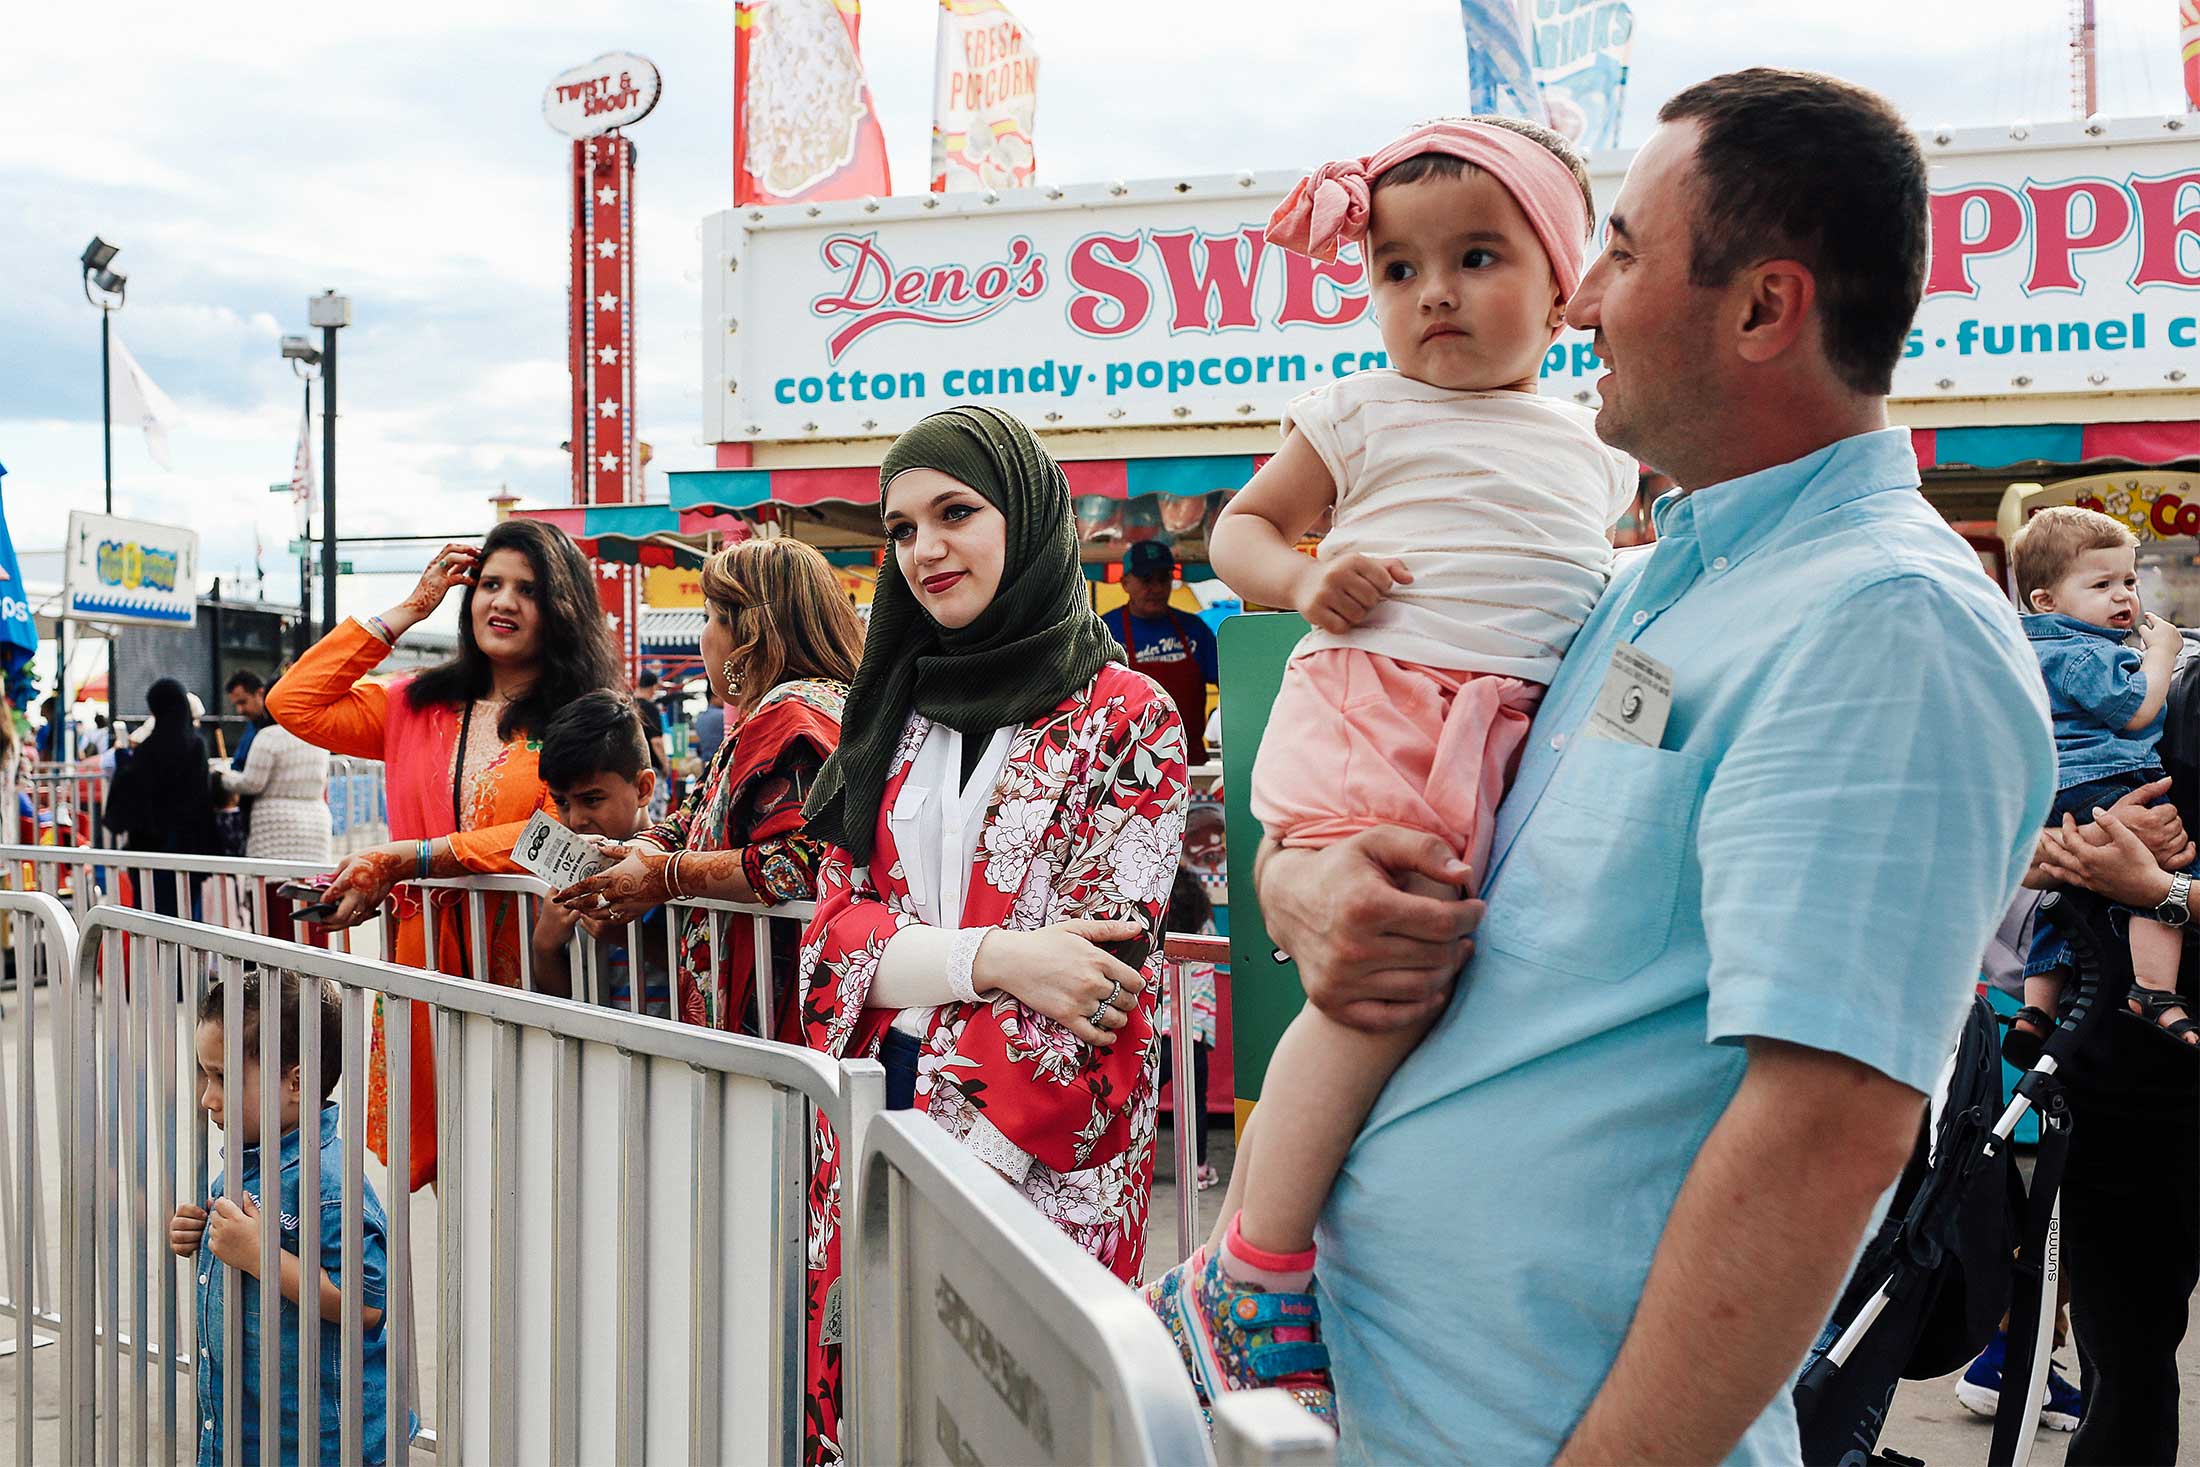 Muslim families celebrate Eid al-Fitr at Luna Park in Coney Island.